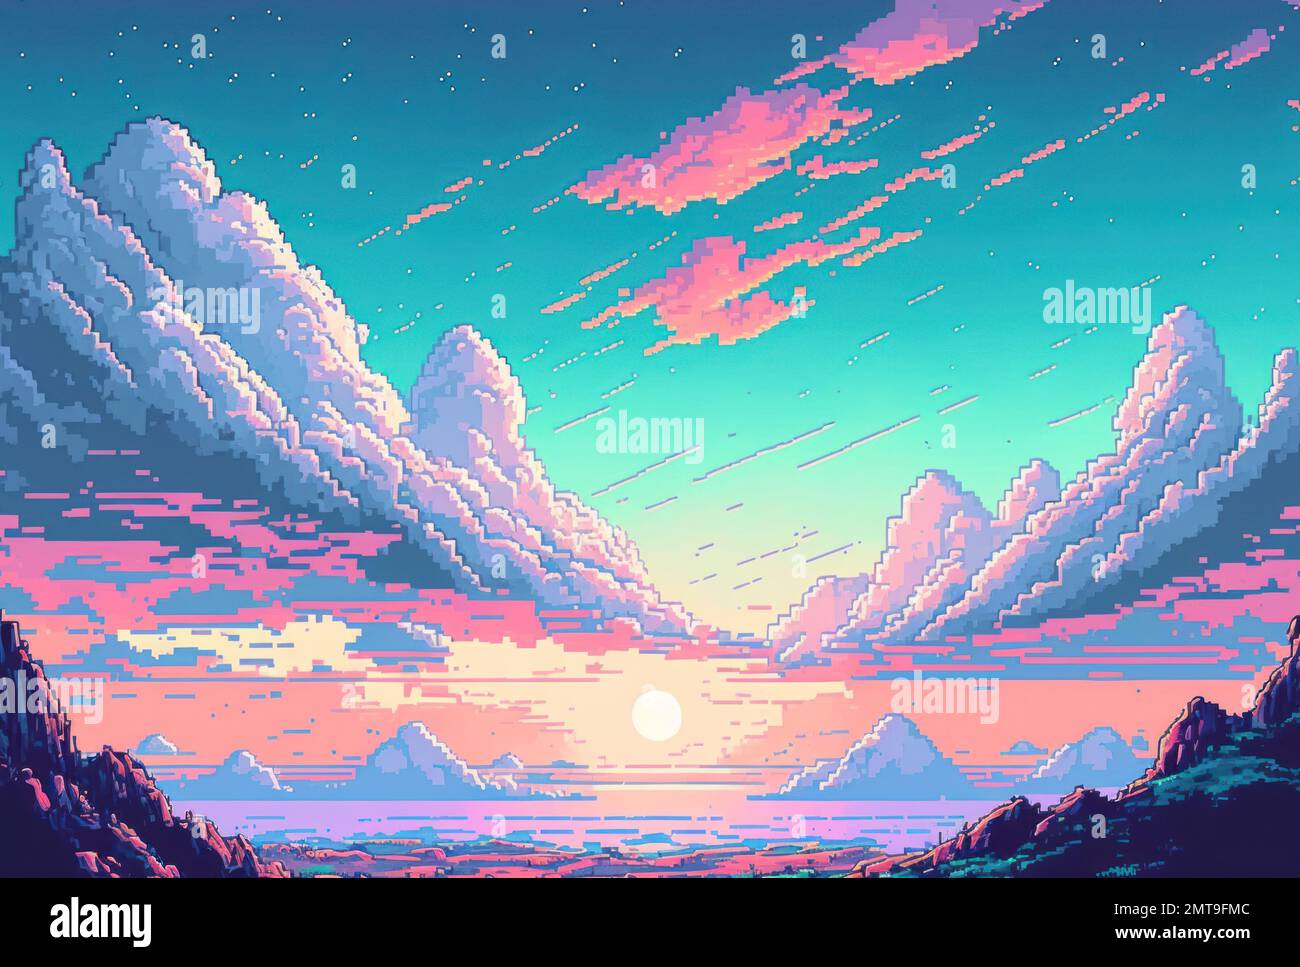 pixel sky backgrounds